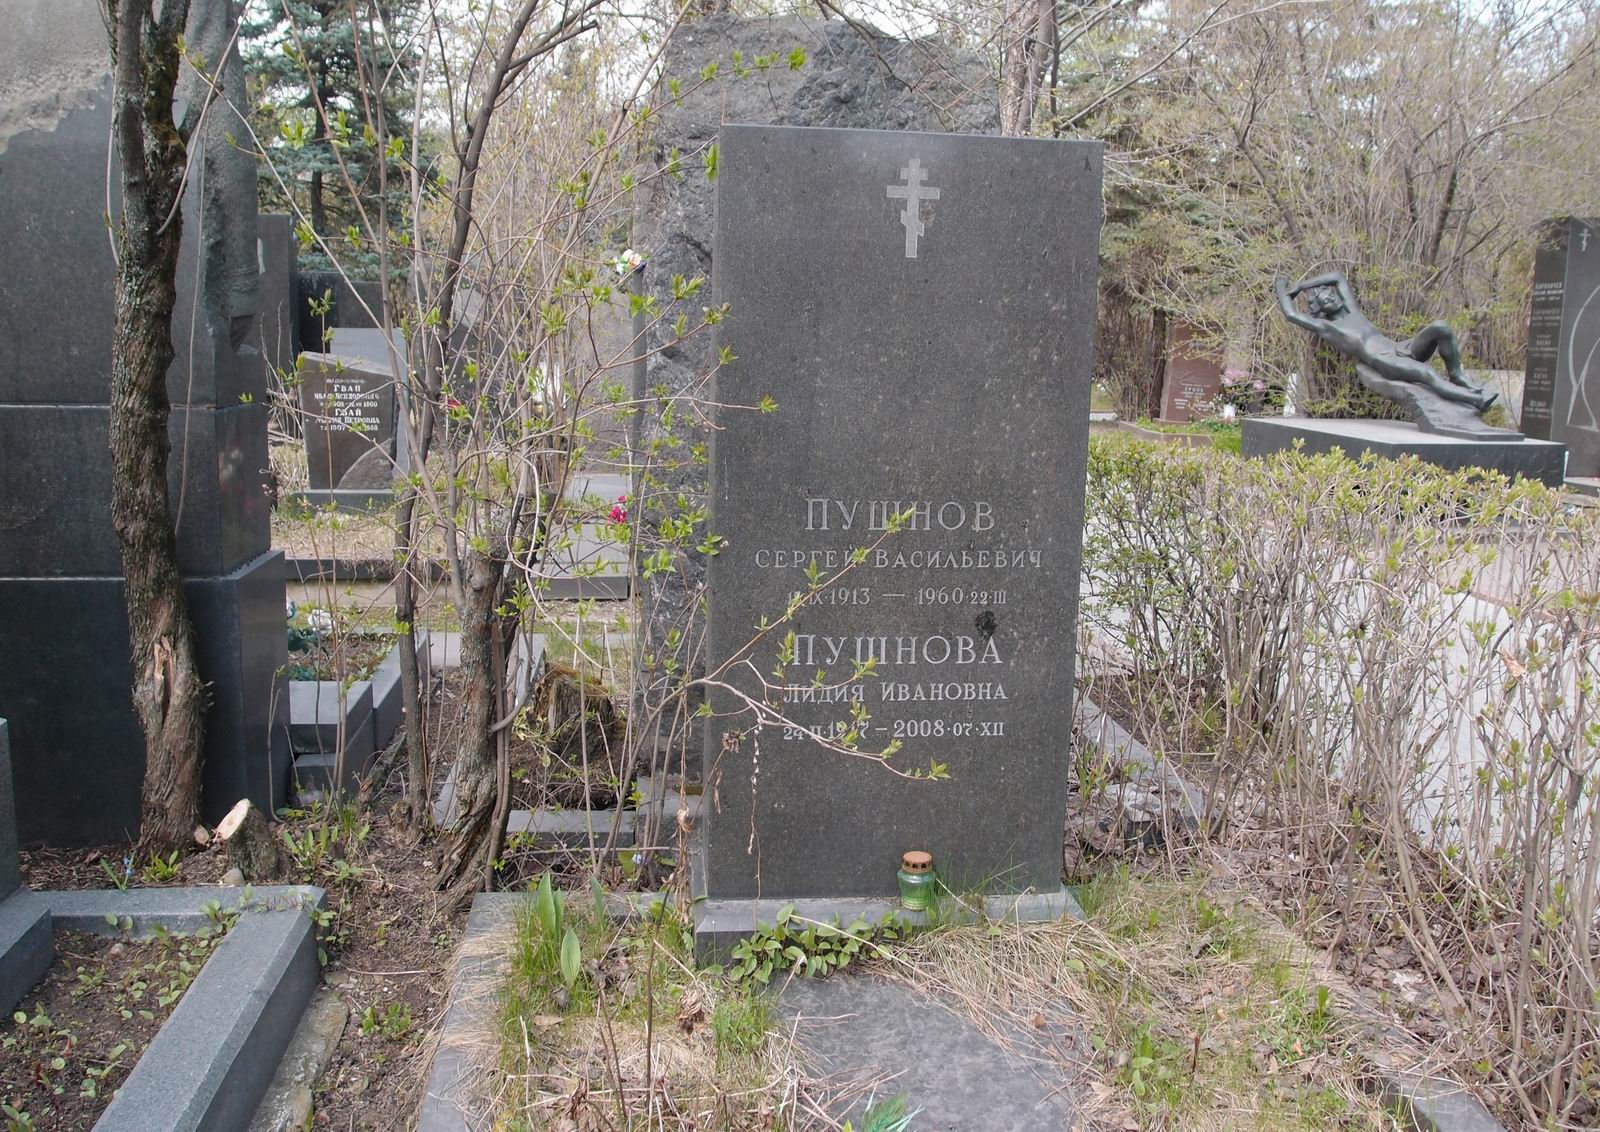 Памятник на могиле Пушнова С.В. (1913–1960), на Новодевичьем кладбище (8–3–1).